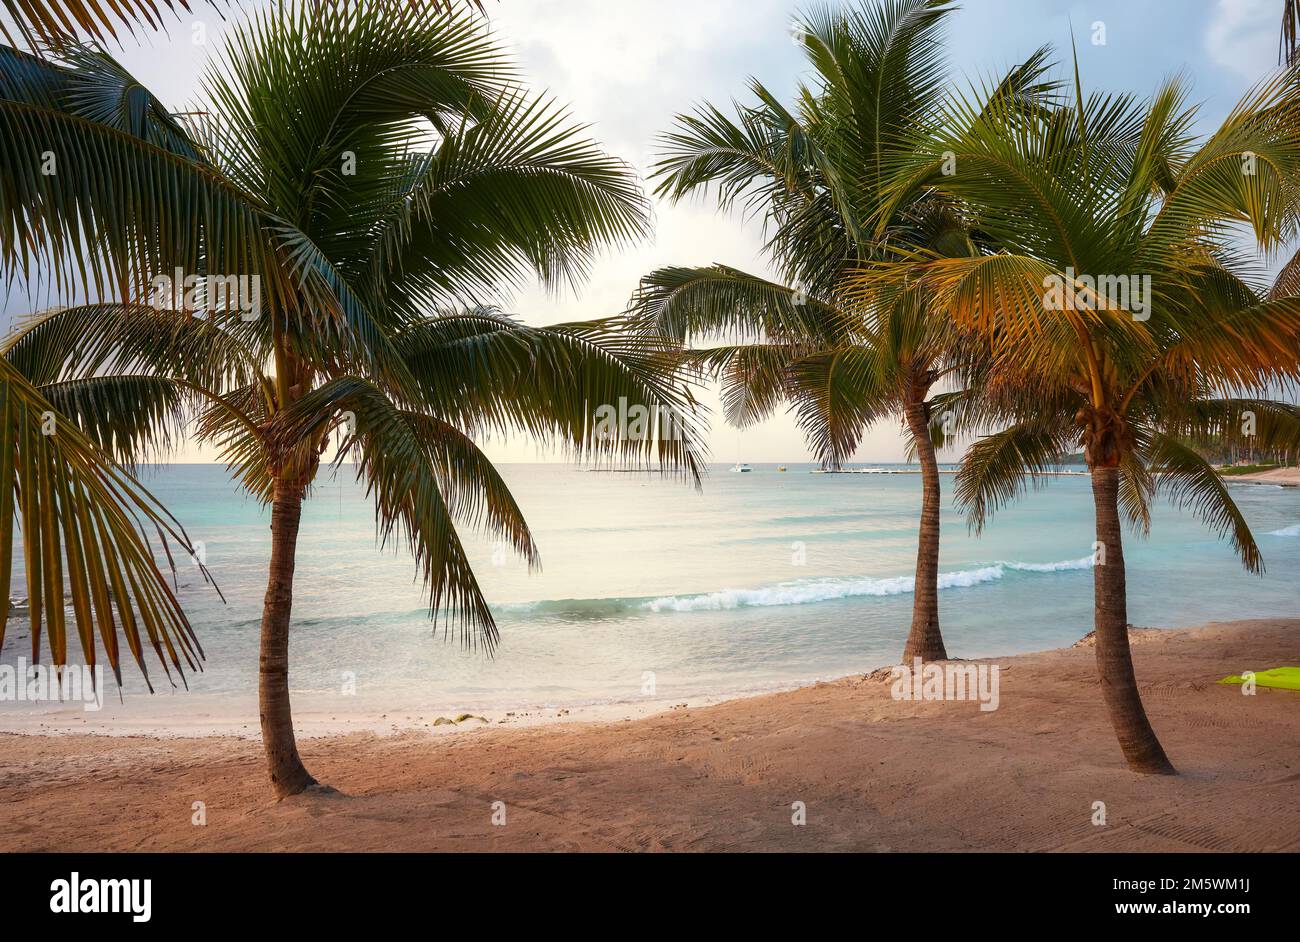 Mexico Caribbean coast tropical beach with coconut palm trees. Stock Photo